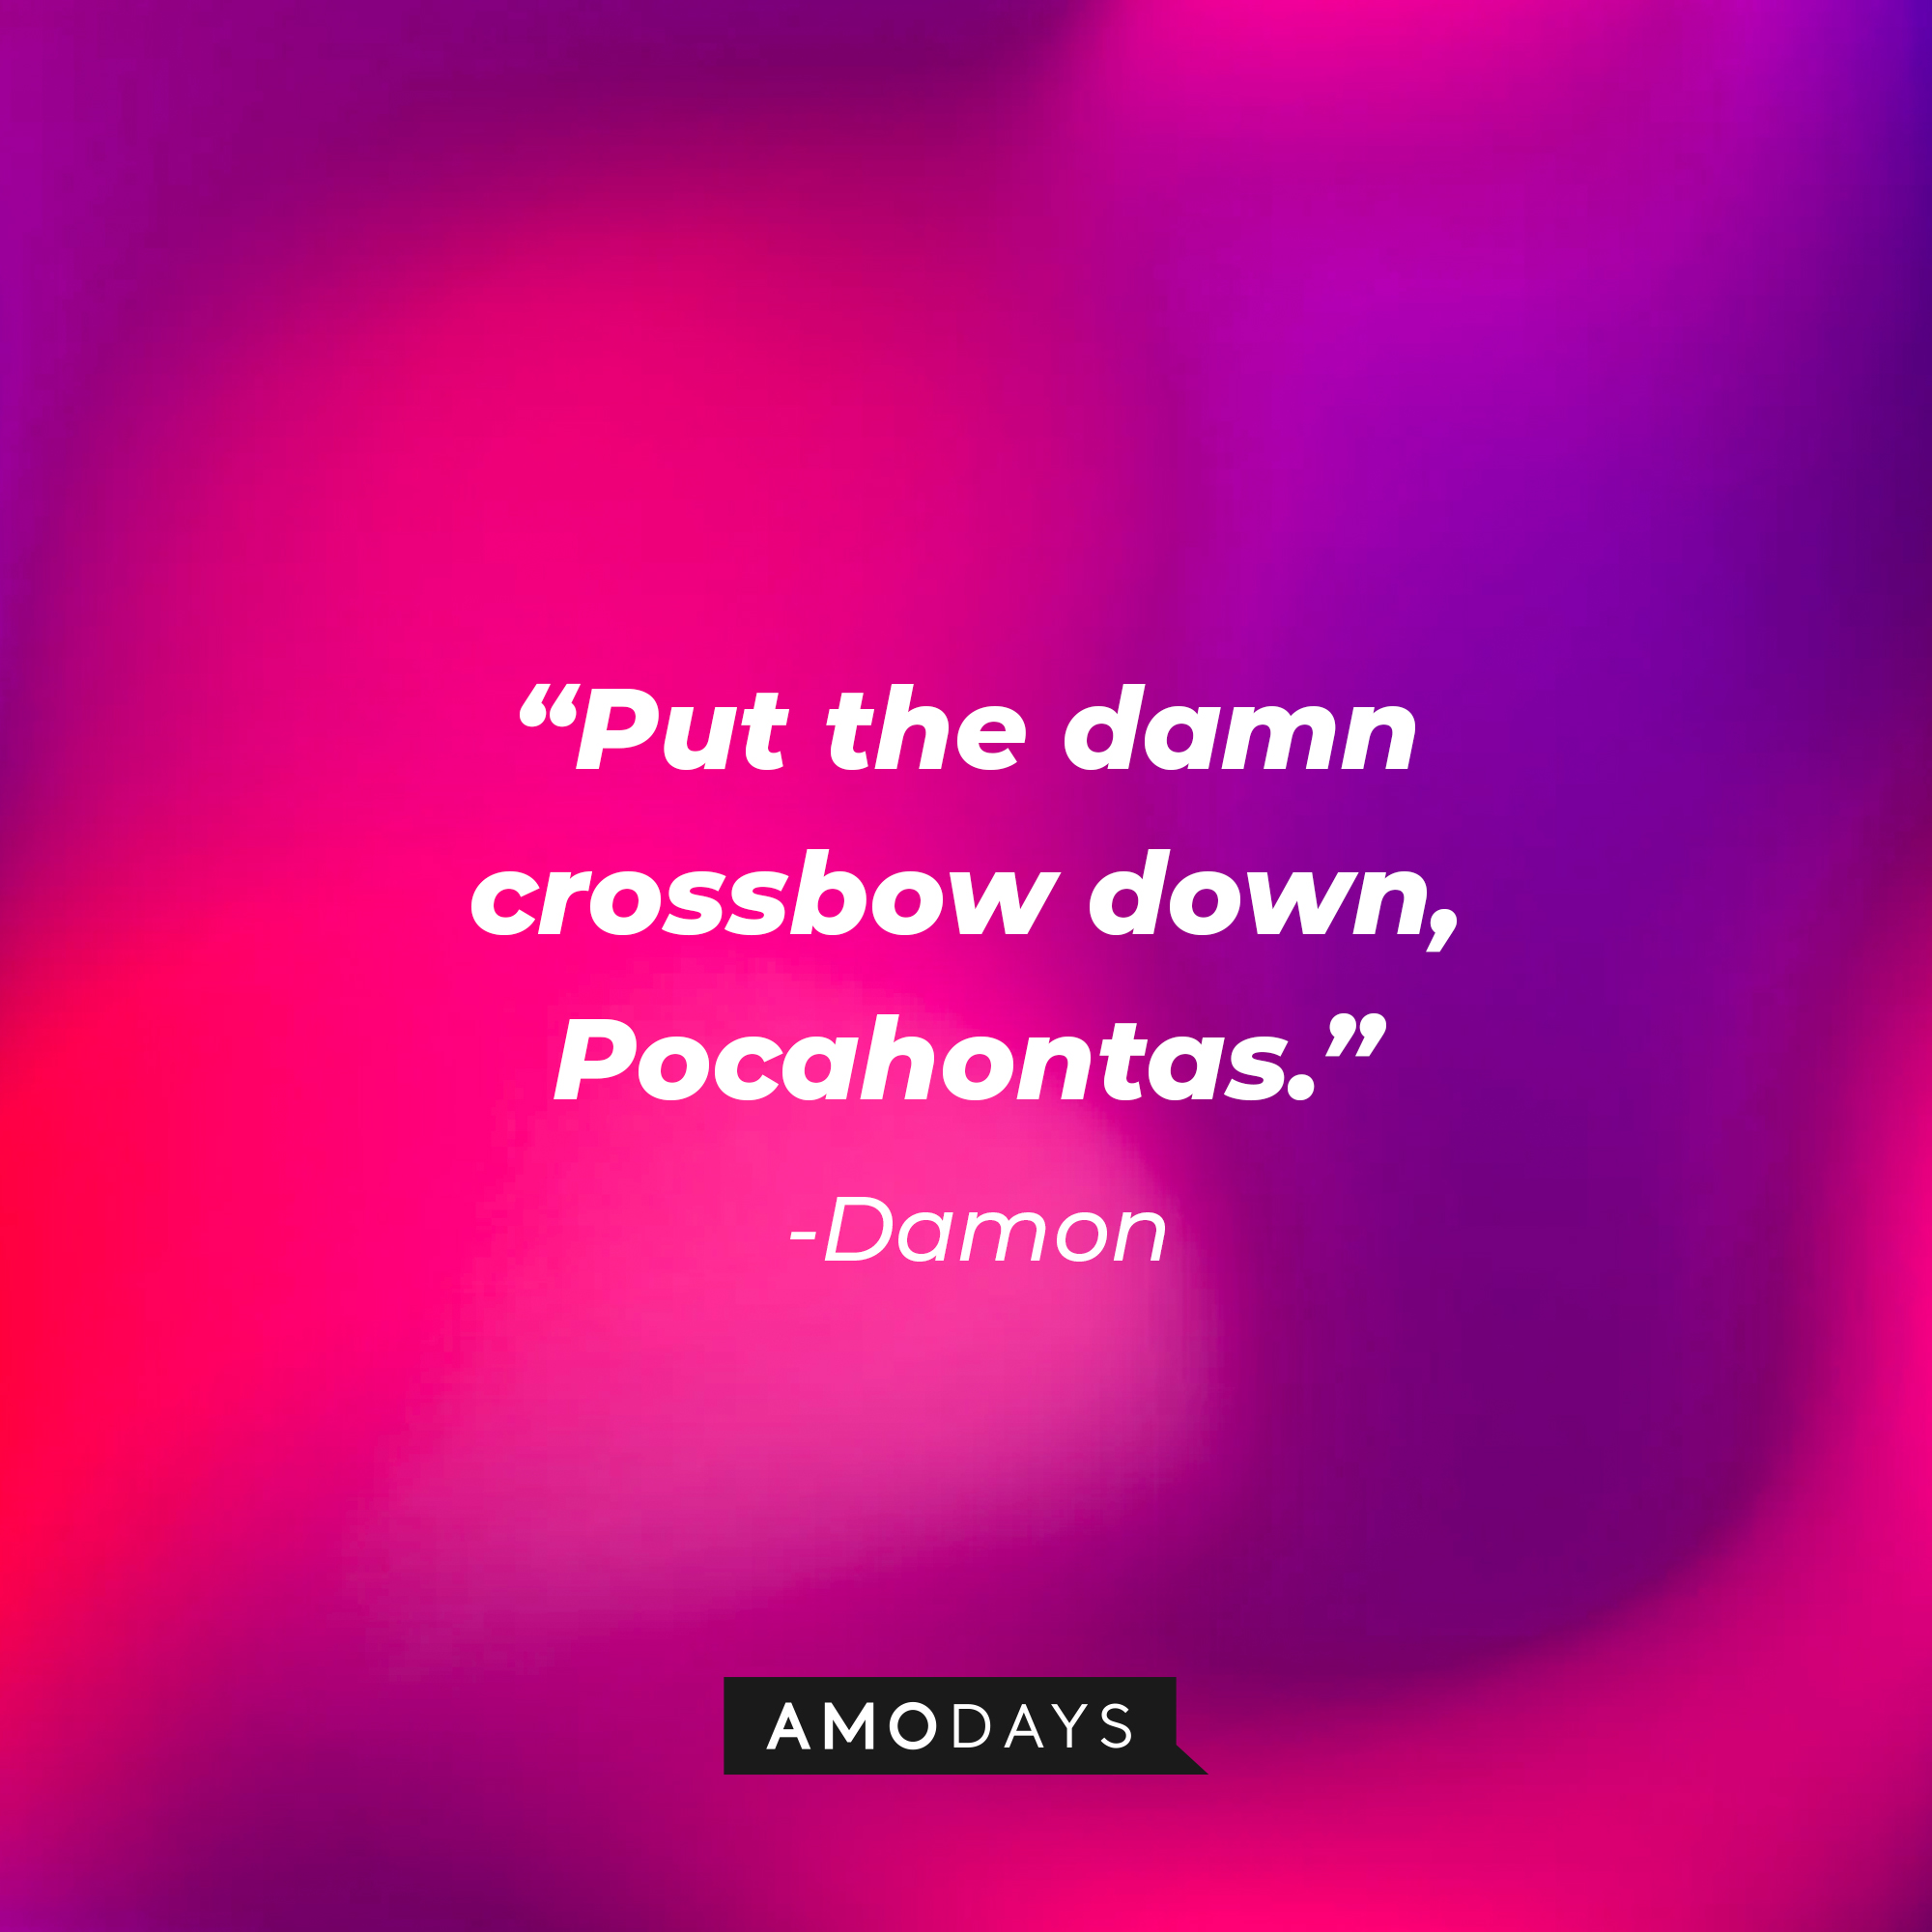 Damon's quote: "Put the damn crossbow down, Pocahontas." | Source: Amodays